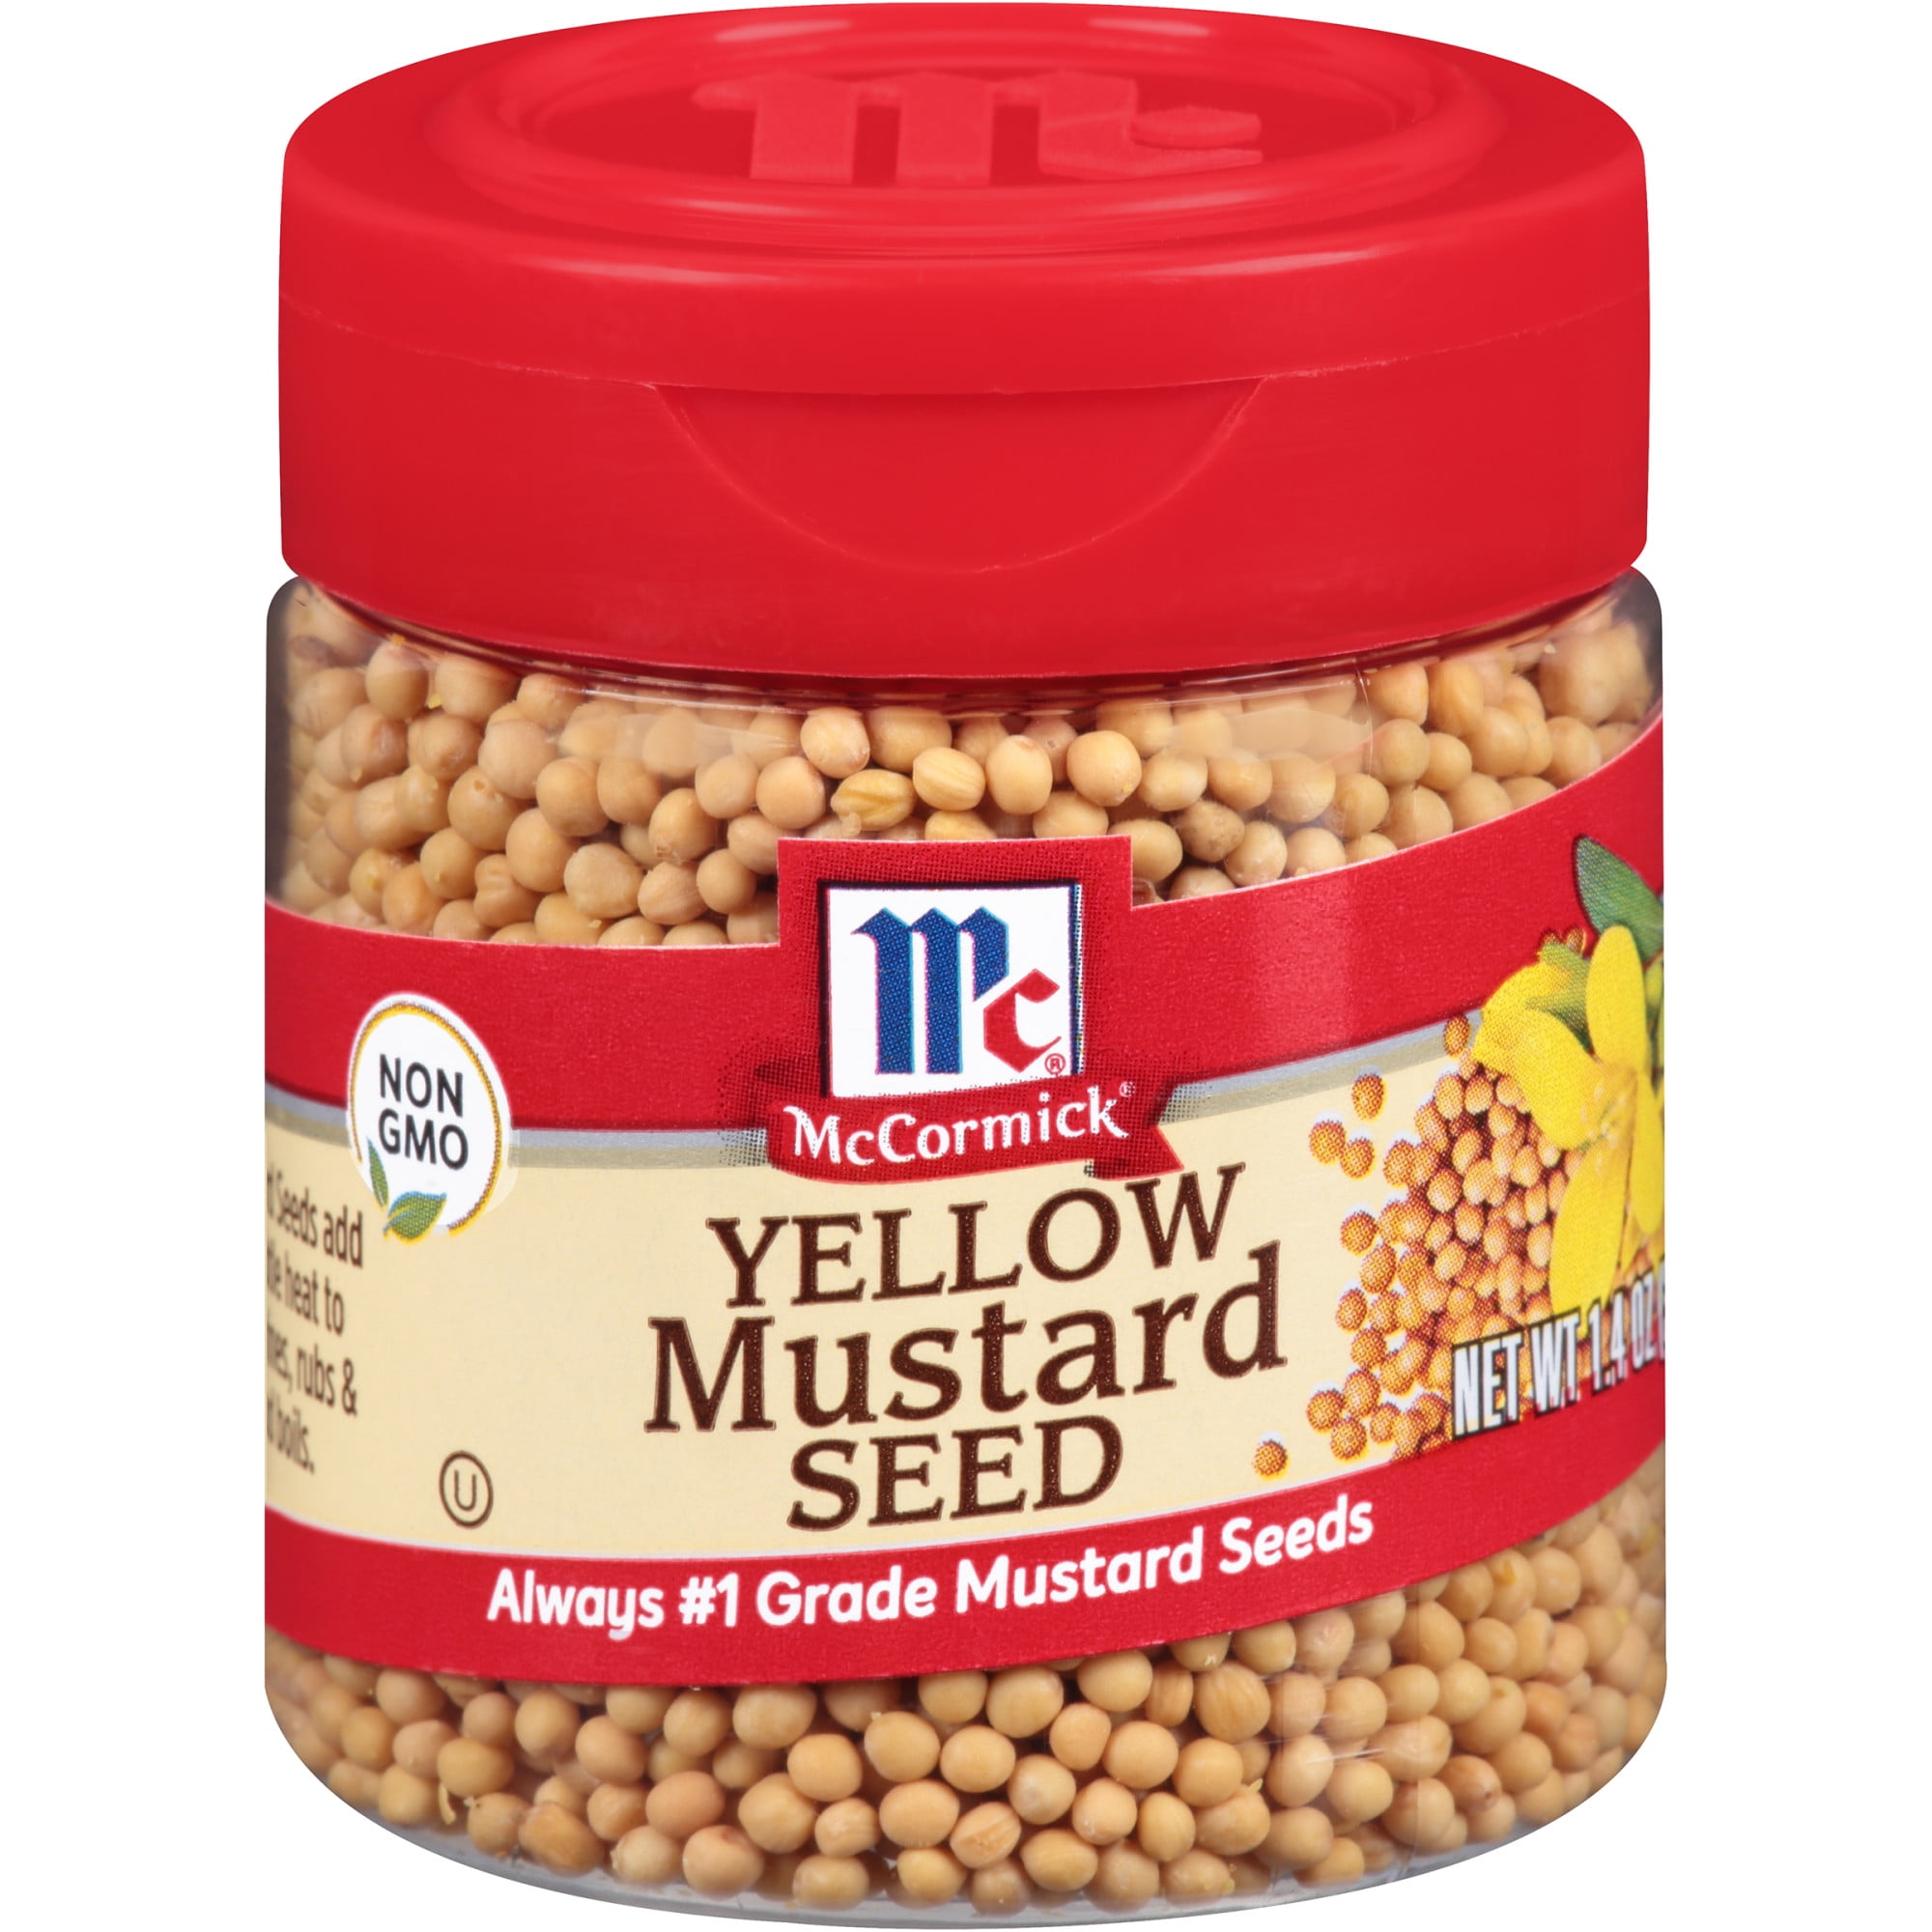 mustard seed comics